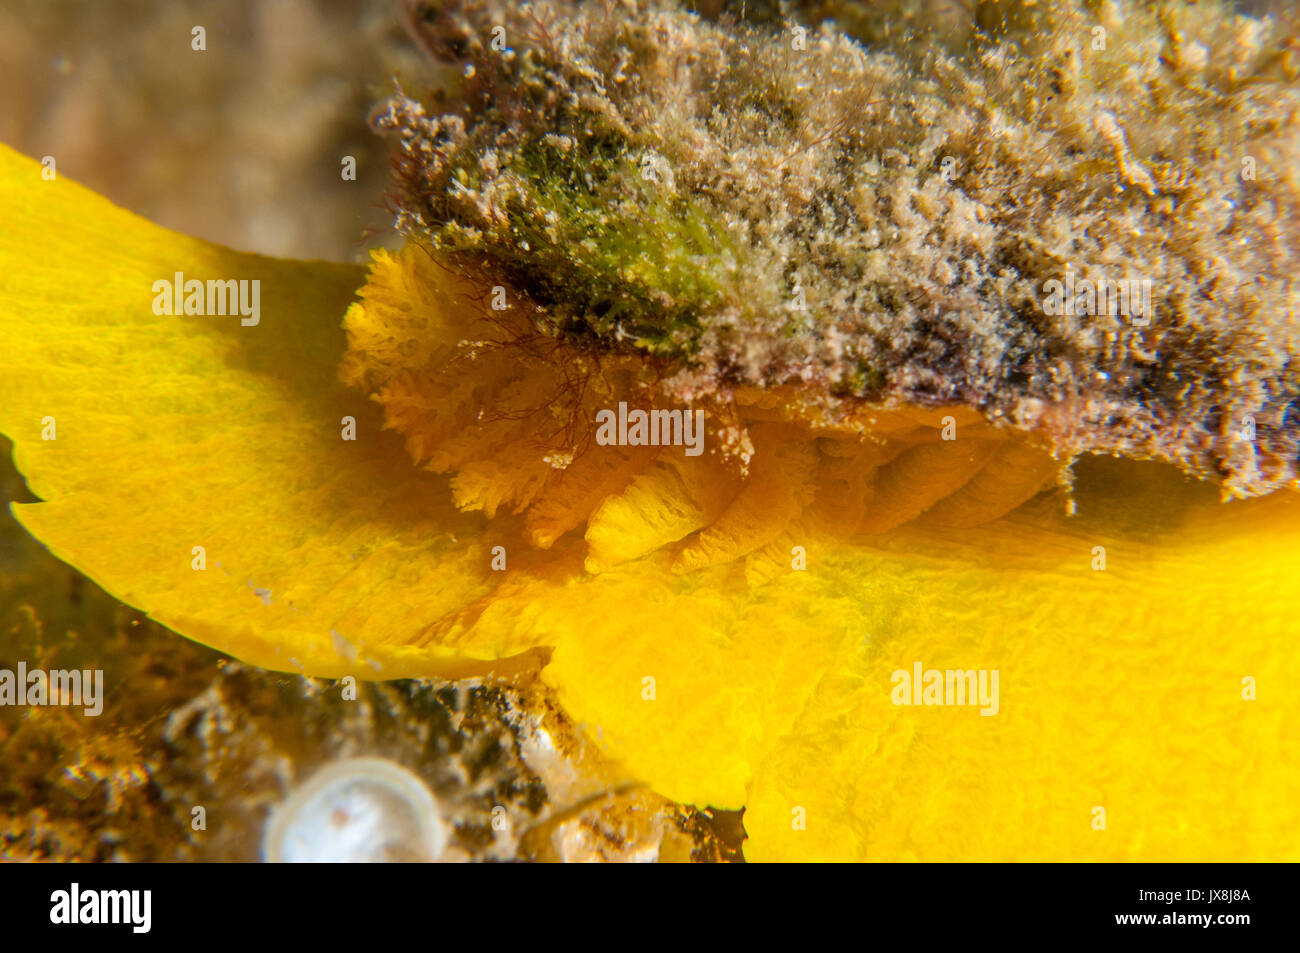 close-up of the gills of a yellow umbrella slug (Tylodina perversa) on the sea floor, L'Escala, Costa Brava, Catalonia, Spain Stock Photo